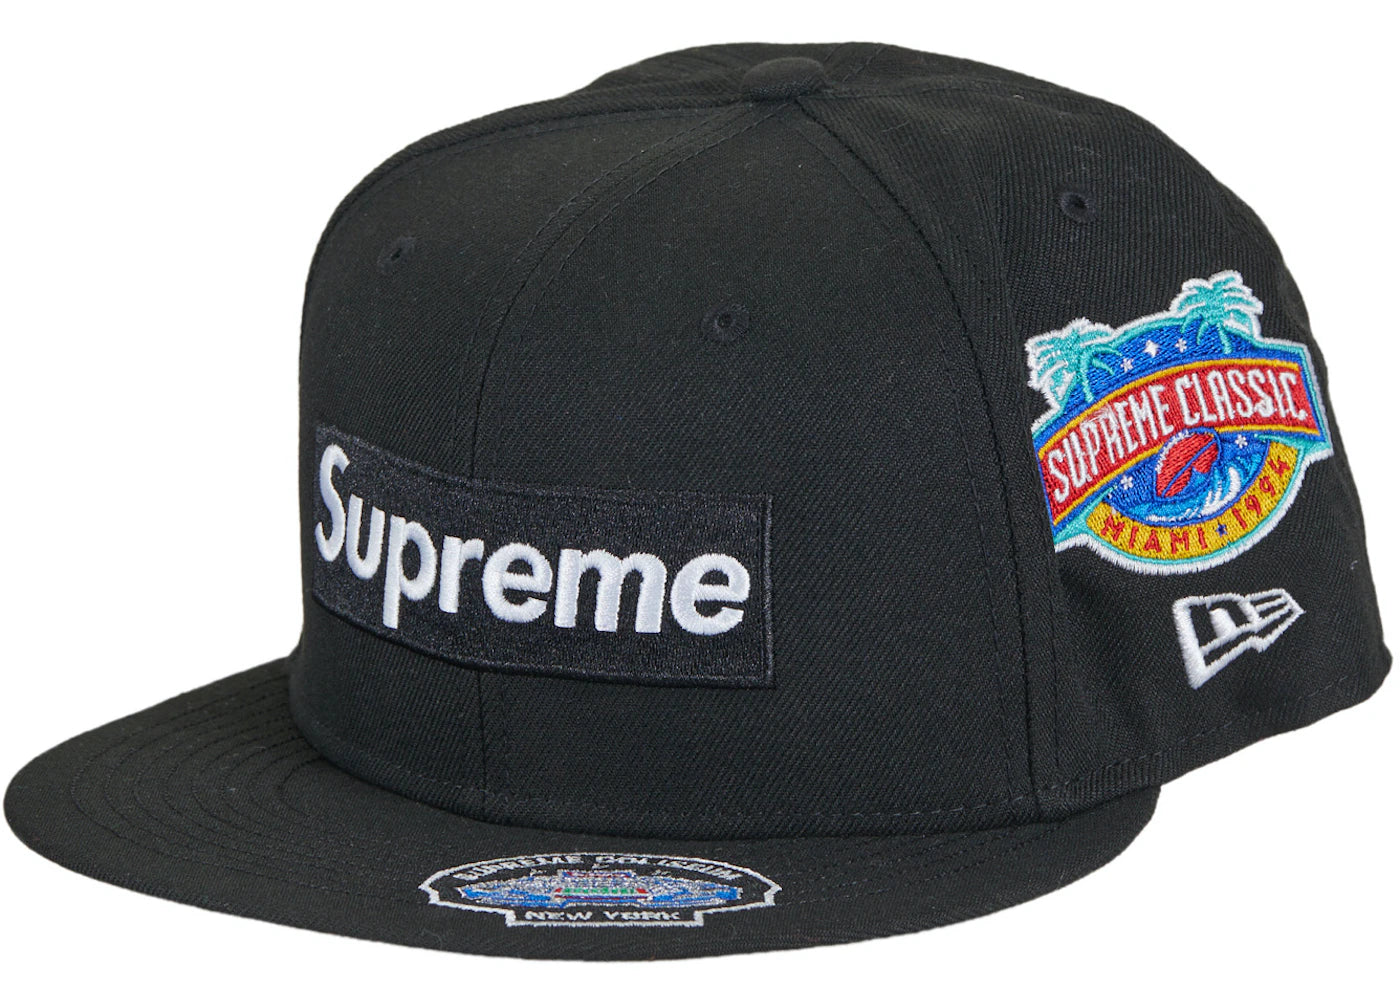 Supreme Championships Box Logo New Era Fitted Hat Black ...